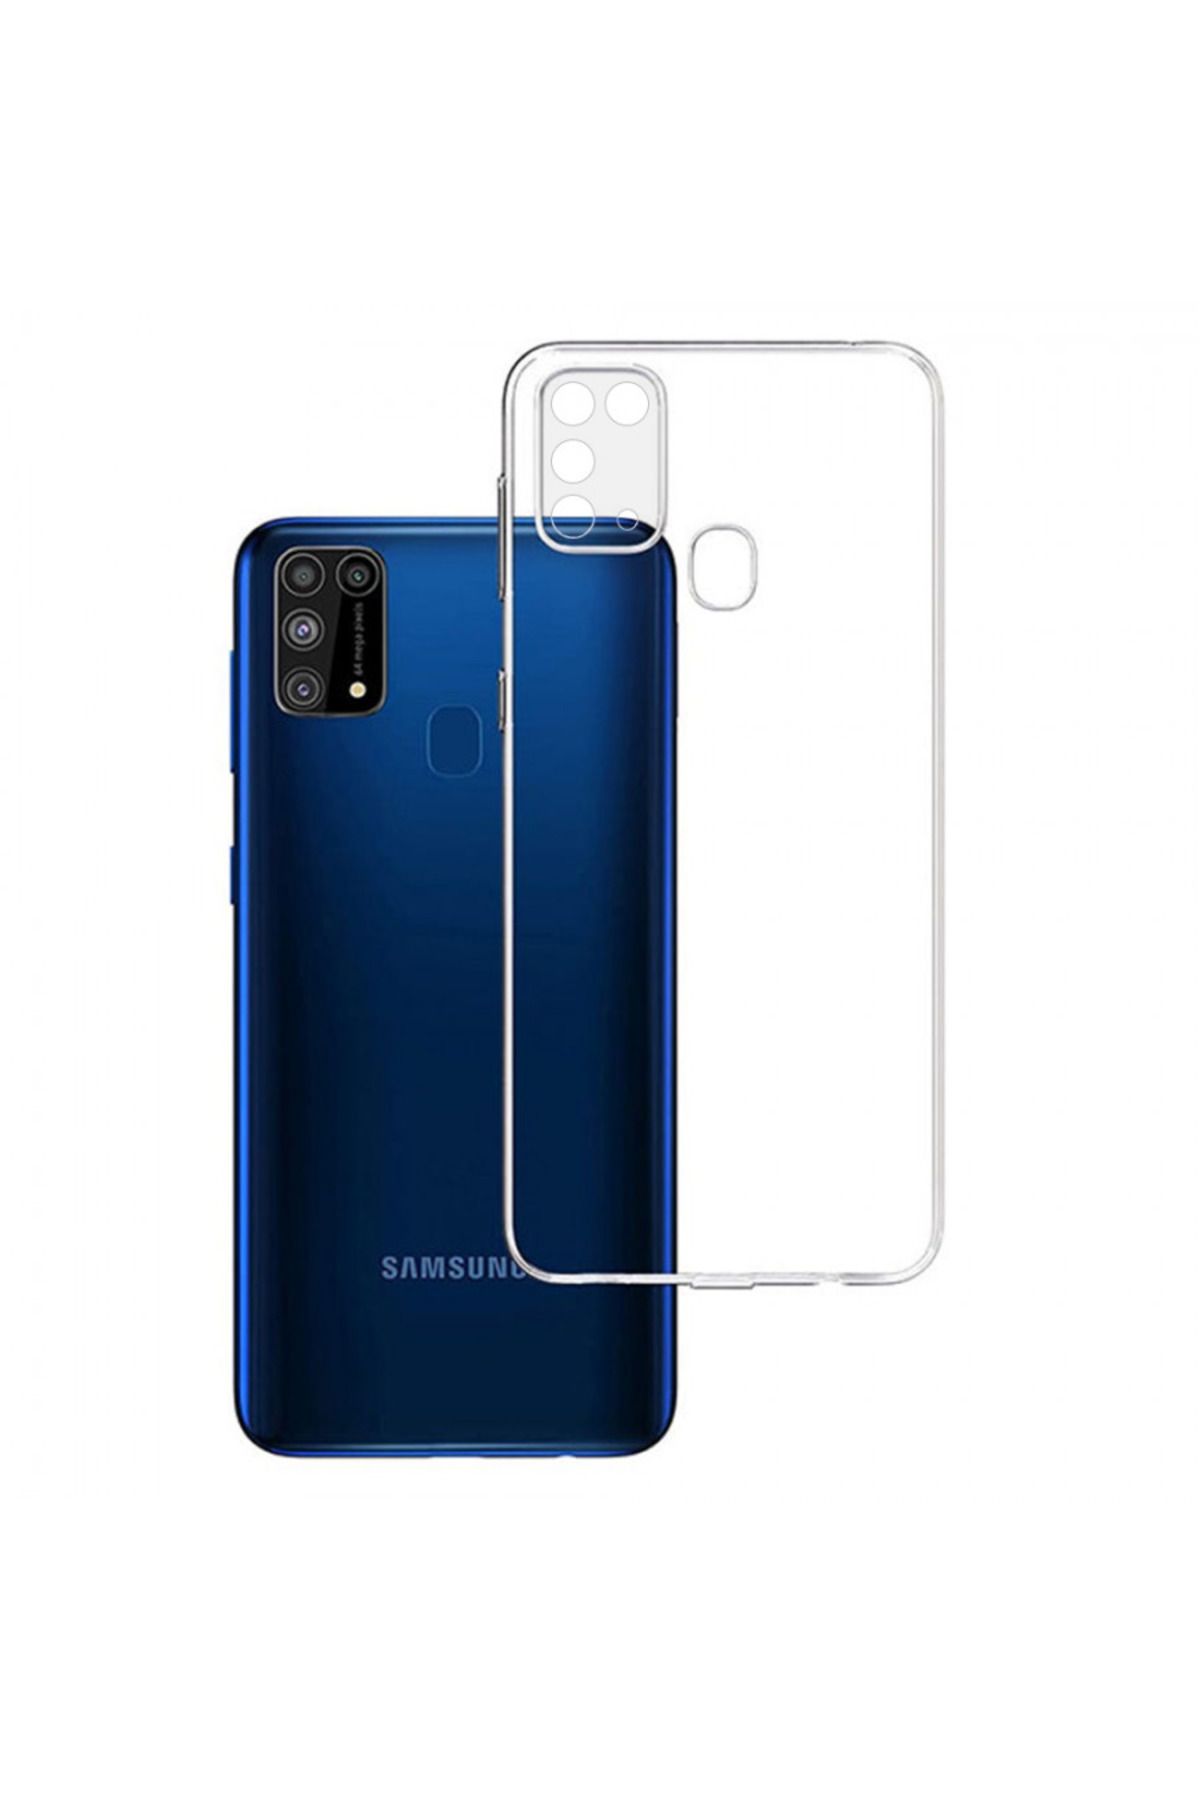 Fibaks Samsung Galaxy M21 M30s Uyumlu Kılıf Şeffaf Yumuşak Silikon Kapak